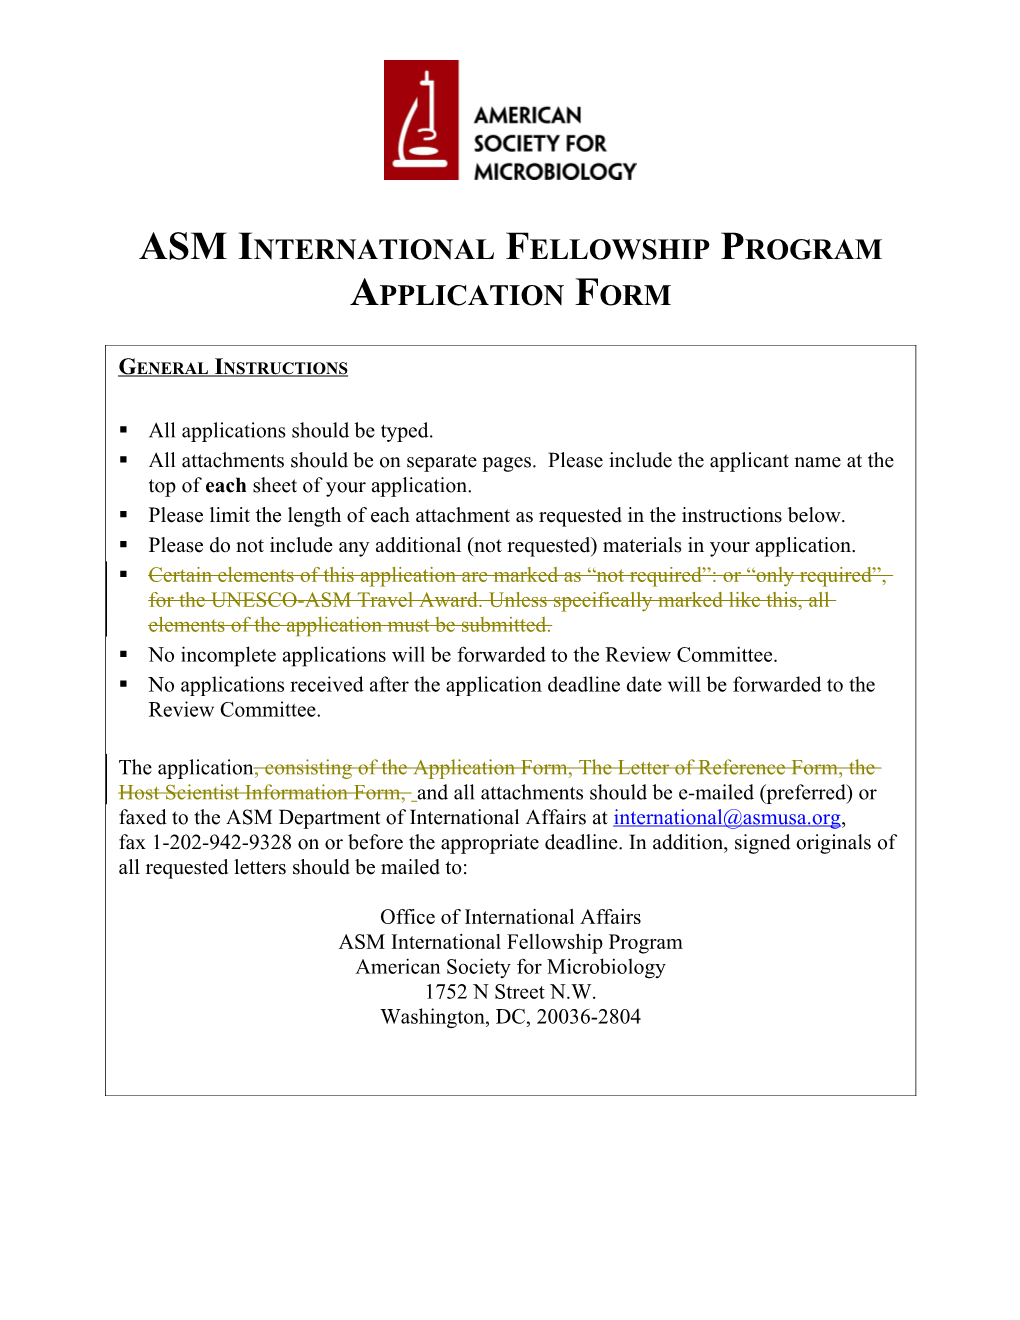 The ASM International Fellowship Program